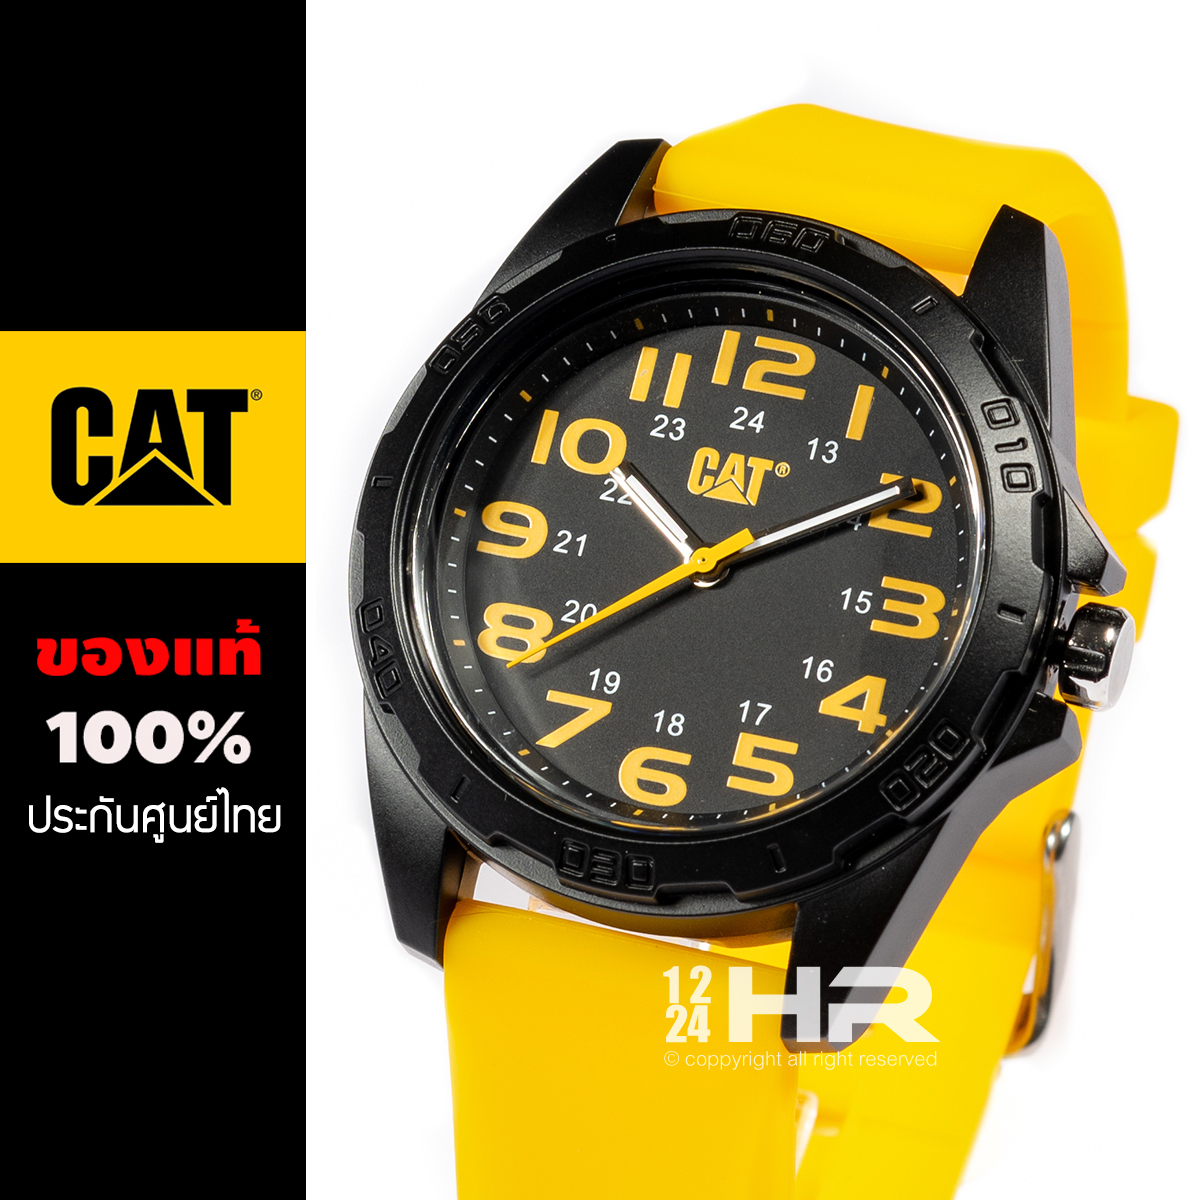 CAT นาฬิกา Caterpillar ผู้ชาย ของแท้ รับประกันศูนย์ไทย 1 ปี นาฬิกา CAT 1B.111.21.112, 1B.111.21.117, 1B.111.27.117 ขนาด 42mm 12/24HR